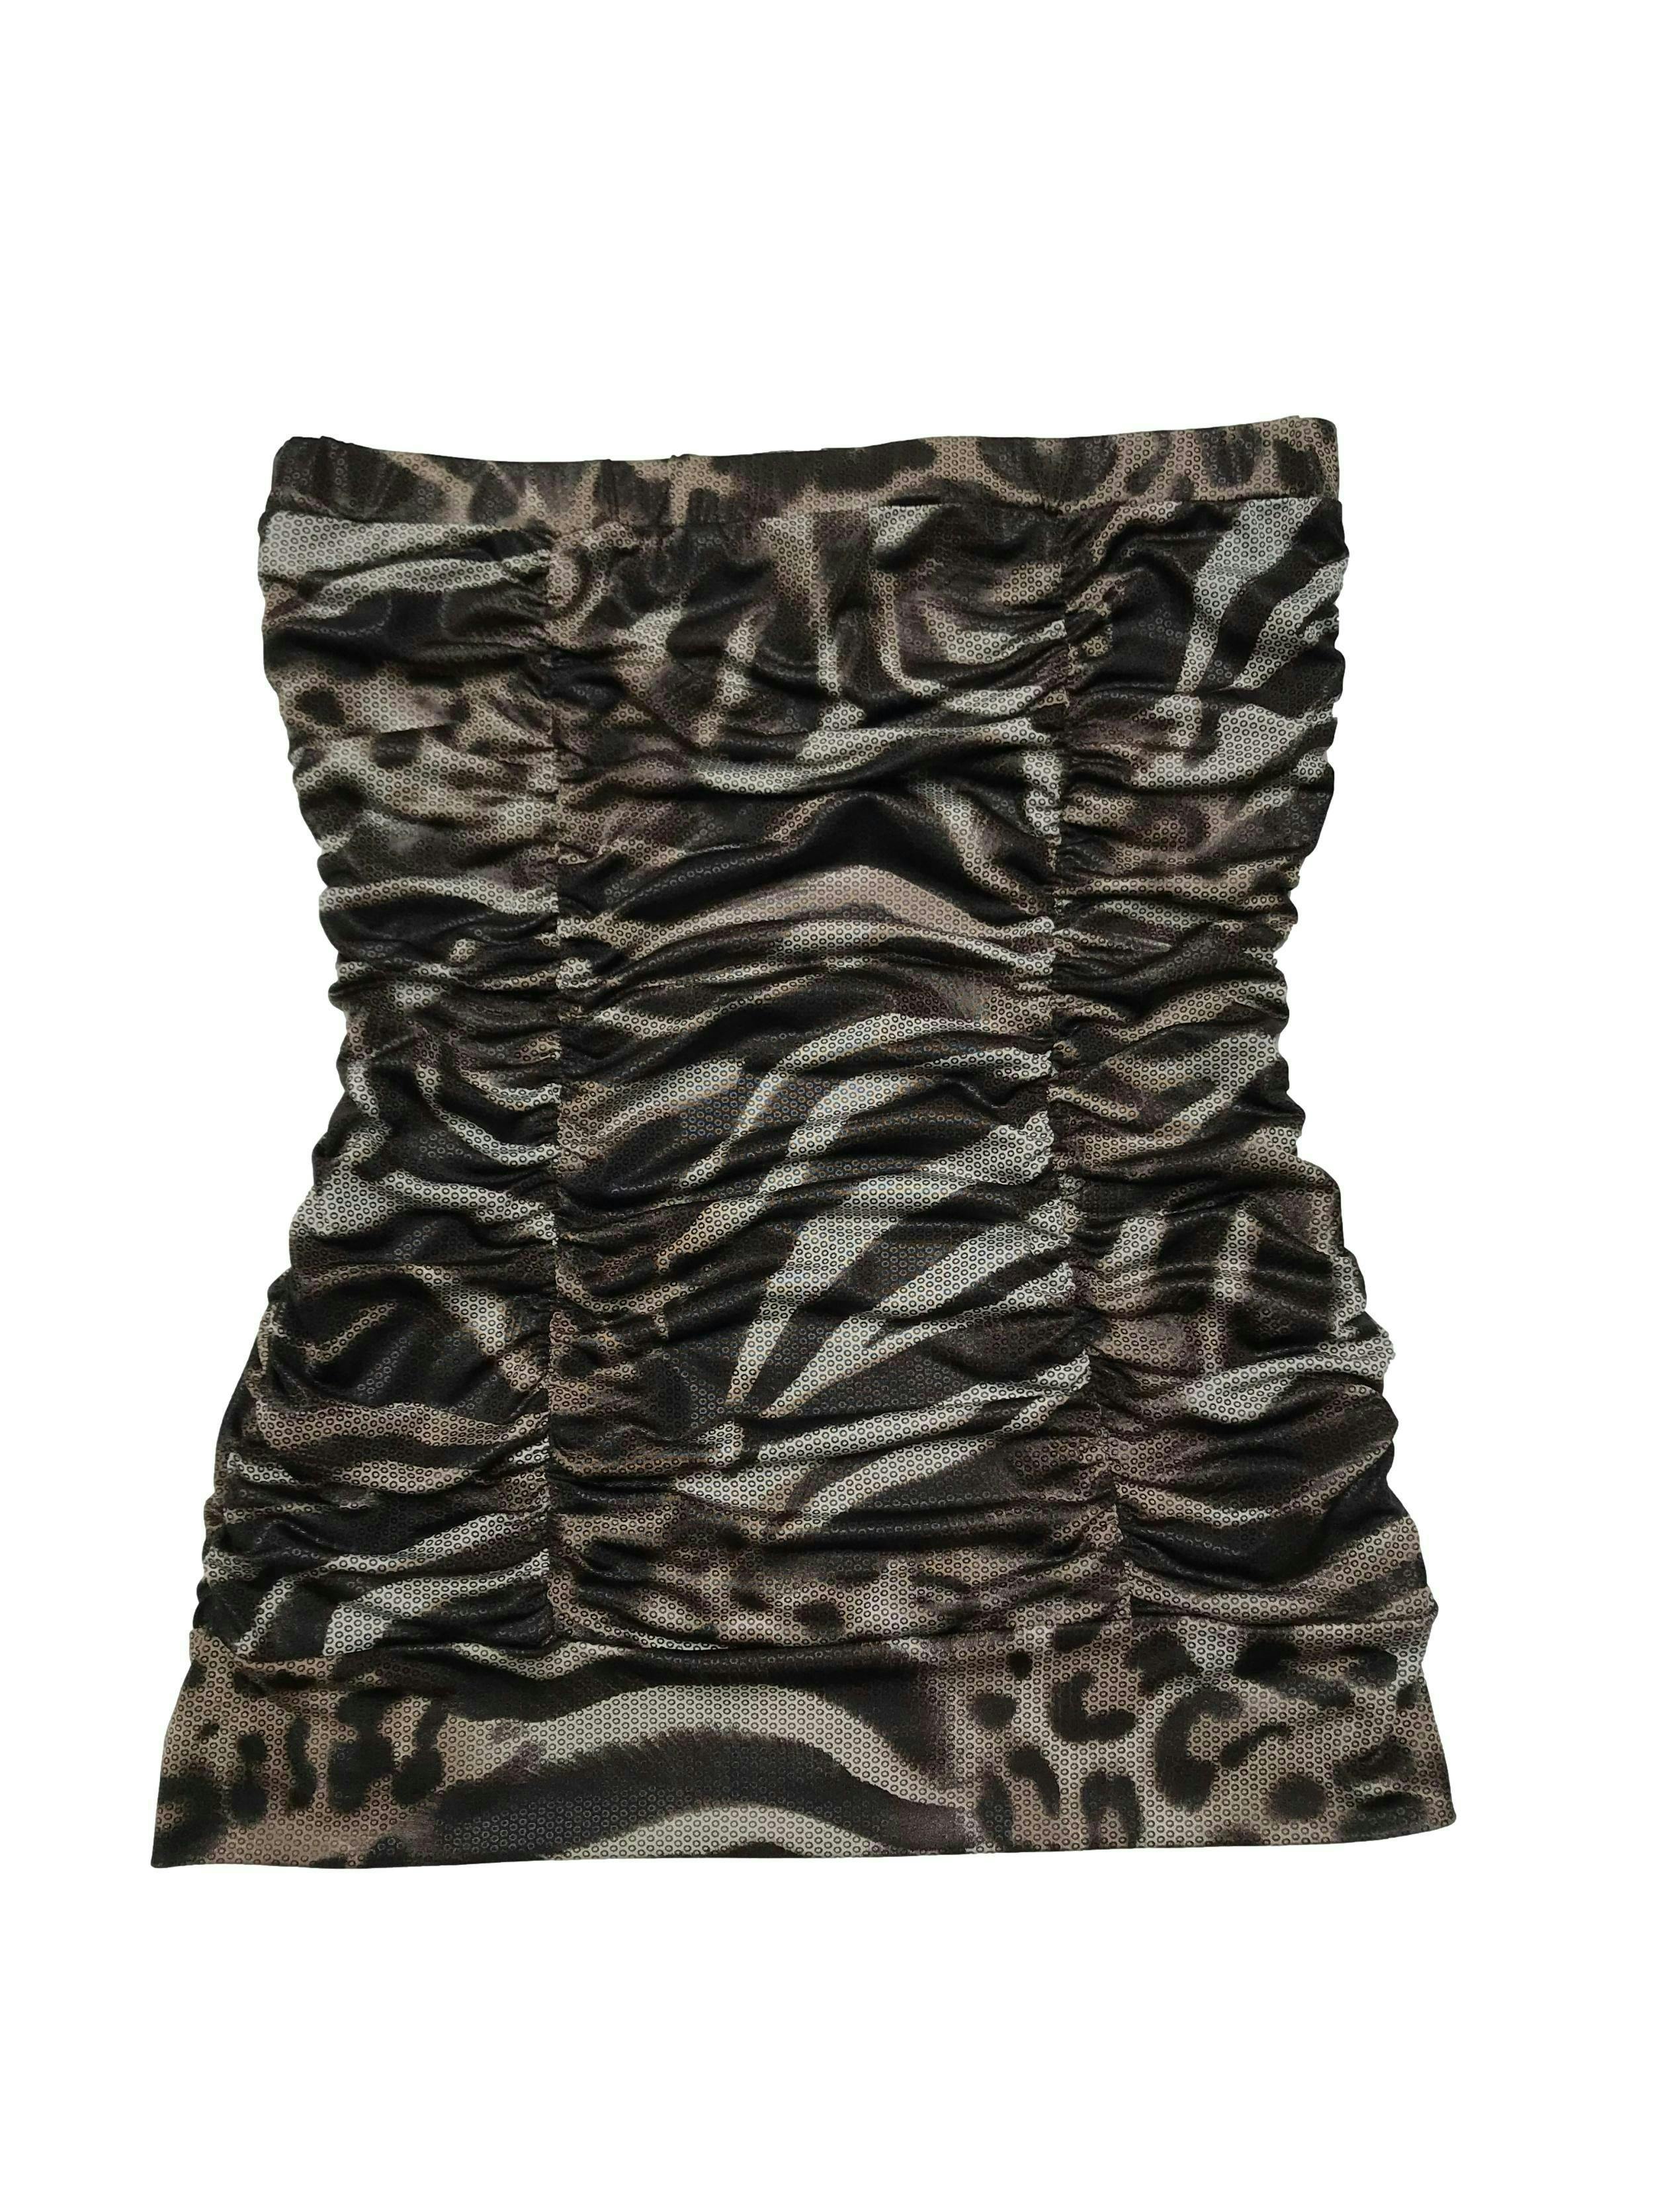 Blusa strapless stretch animal print con drapeados delanteros a lo largo. Largo 45 cm.